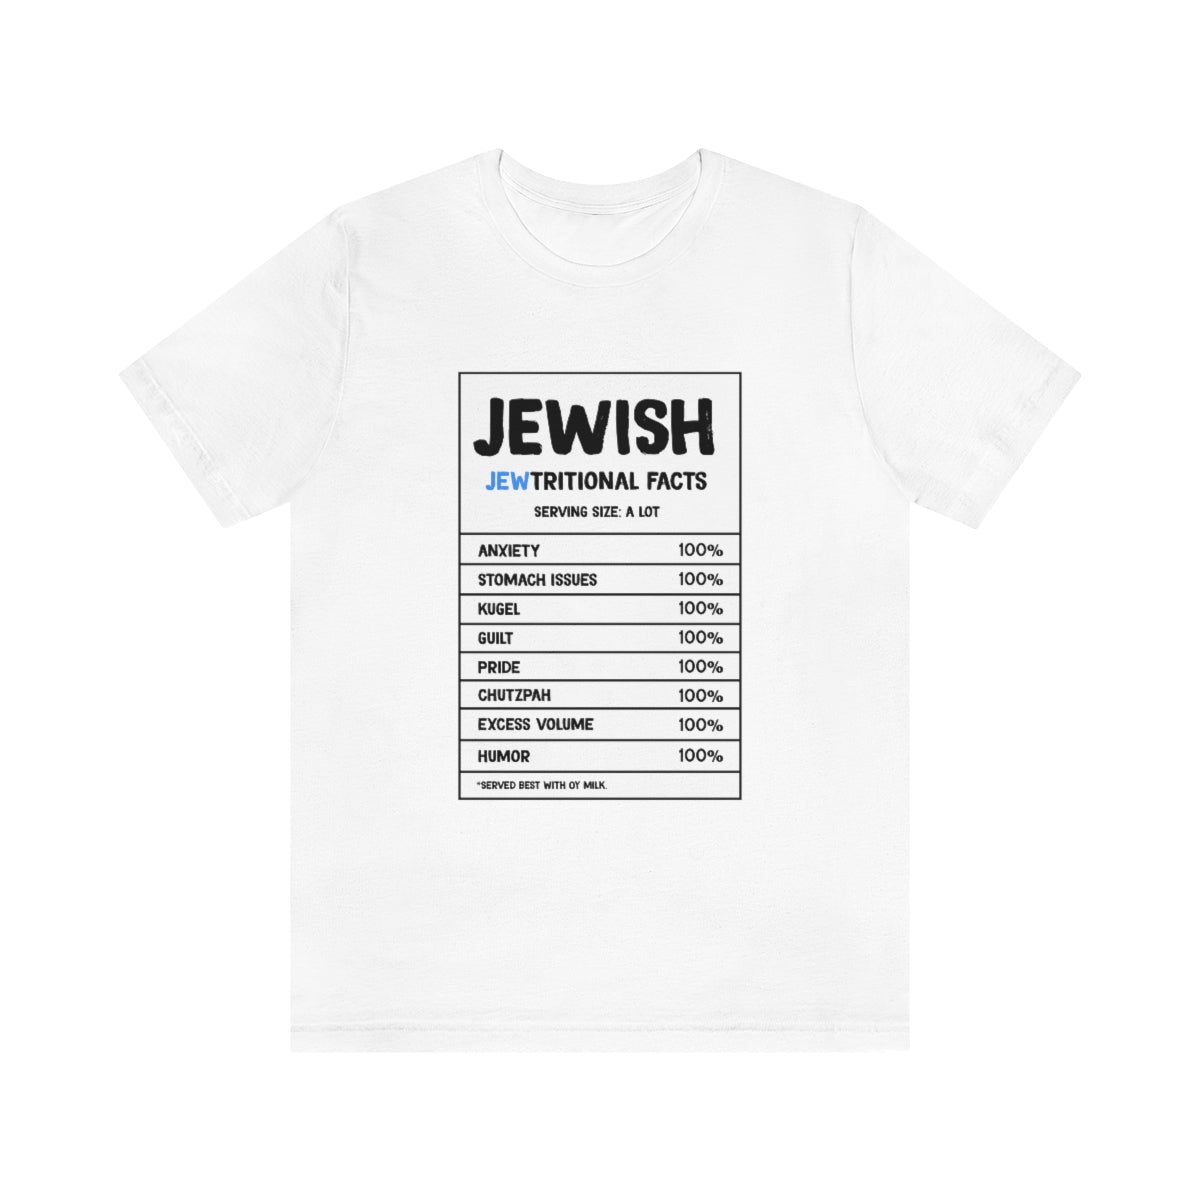 Funny Jewish T-Shirt